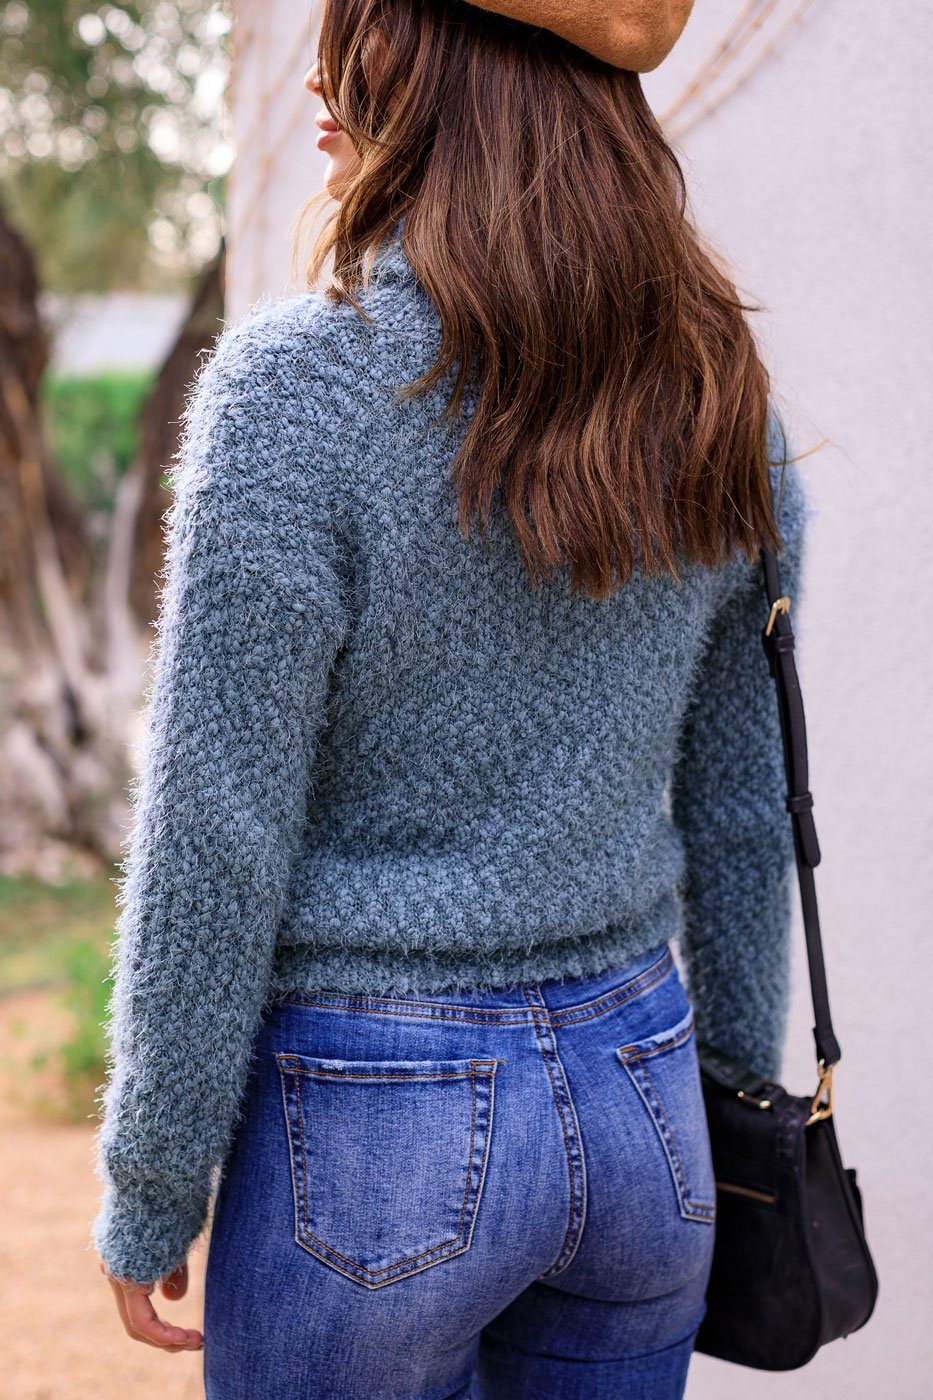 Teal Fuzzy Knit Turtleneck Sweater